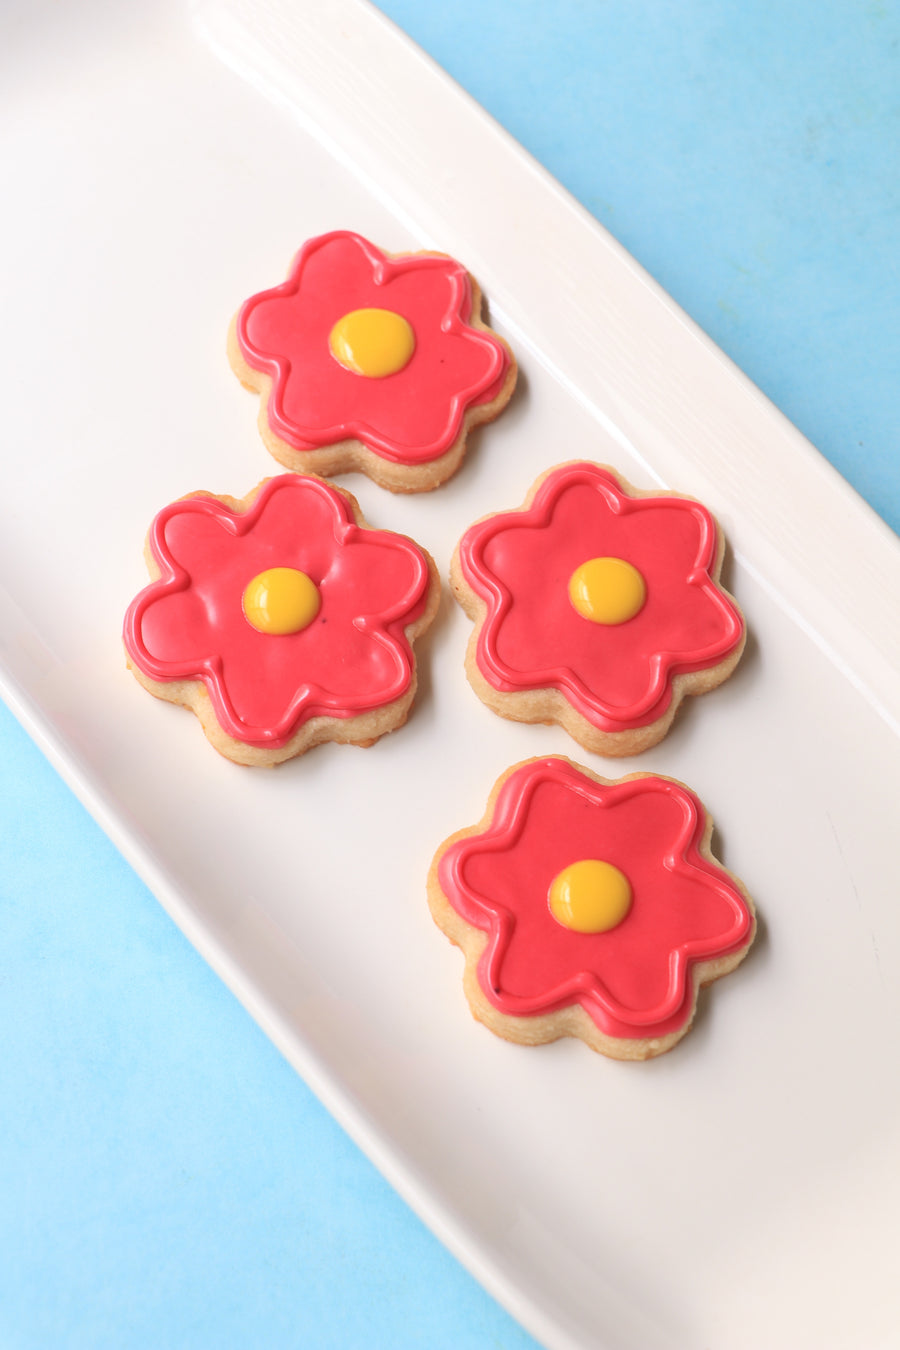 Colour Mill Aqua Blend Royal Icing Flower Cookies 